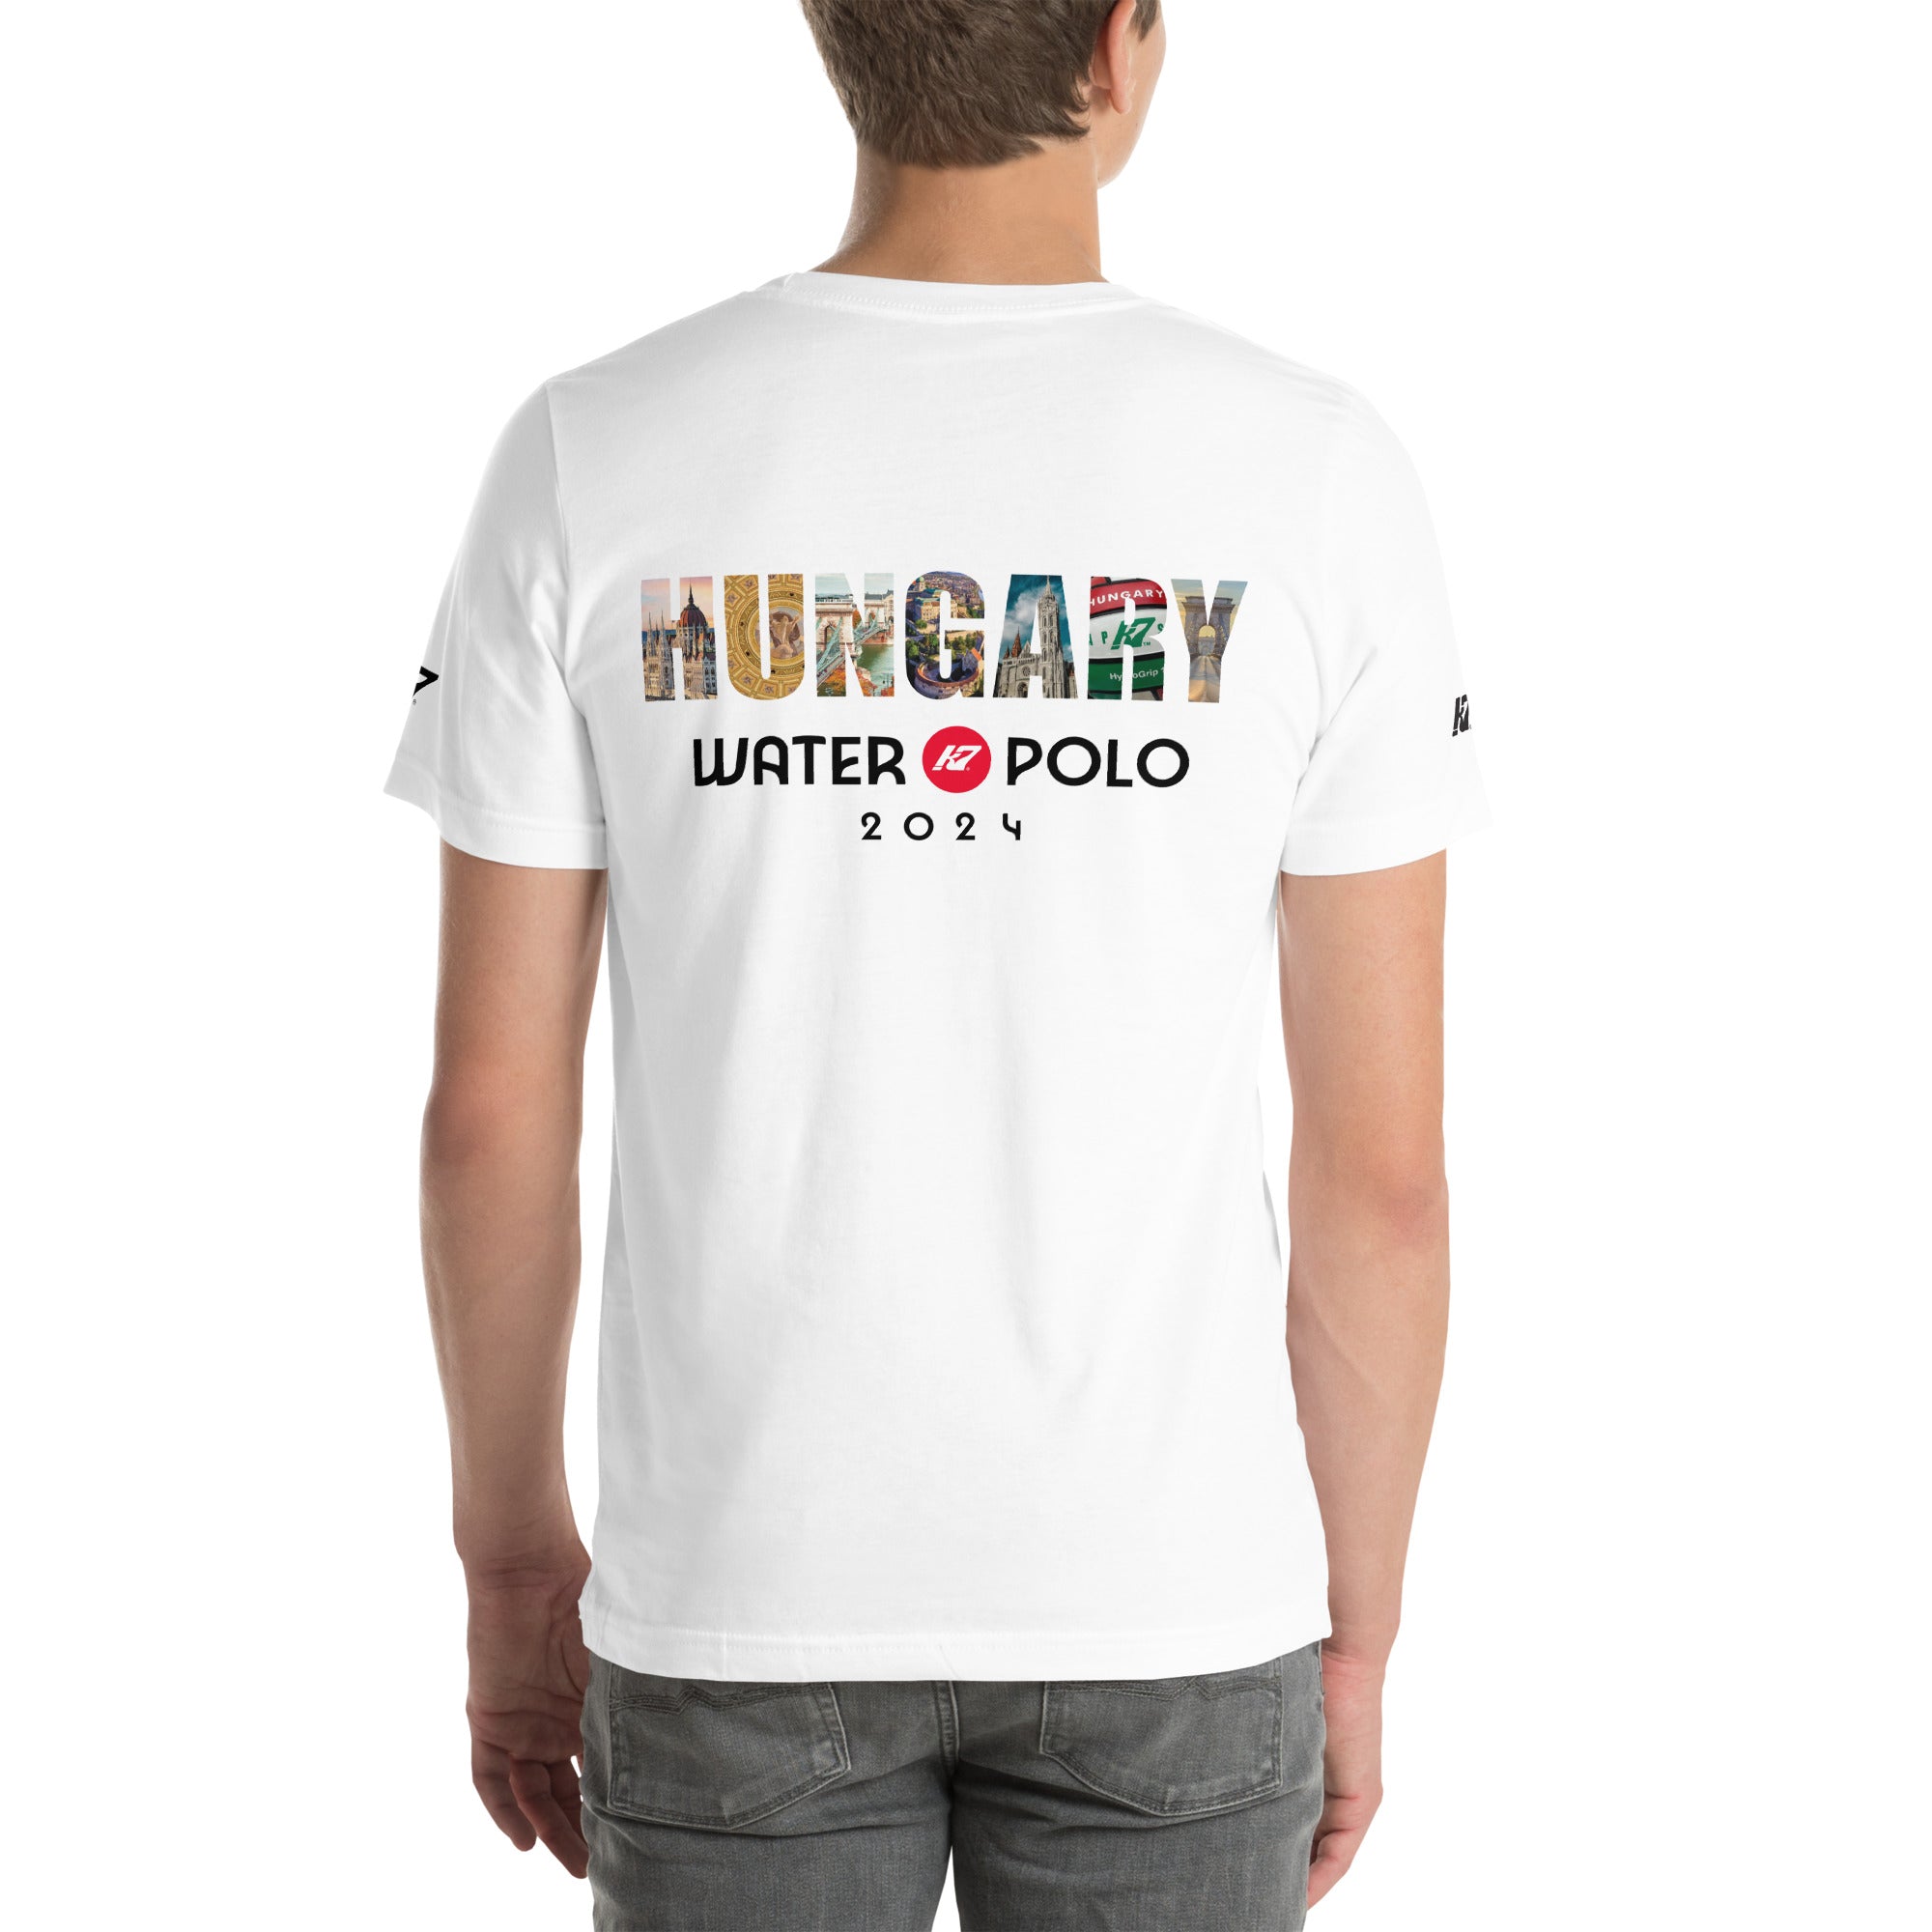 KAP7 Team Hungary 2024 Olympics Unisex T-Shirt